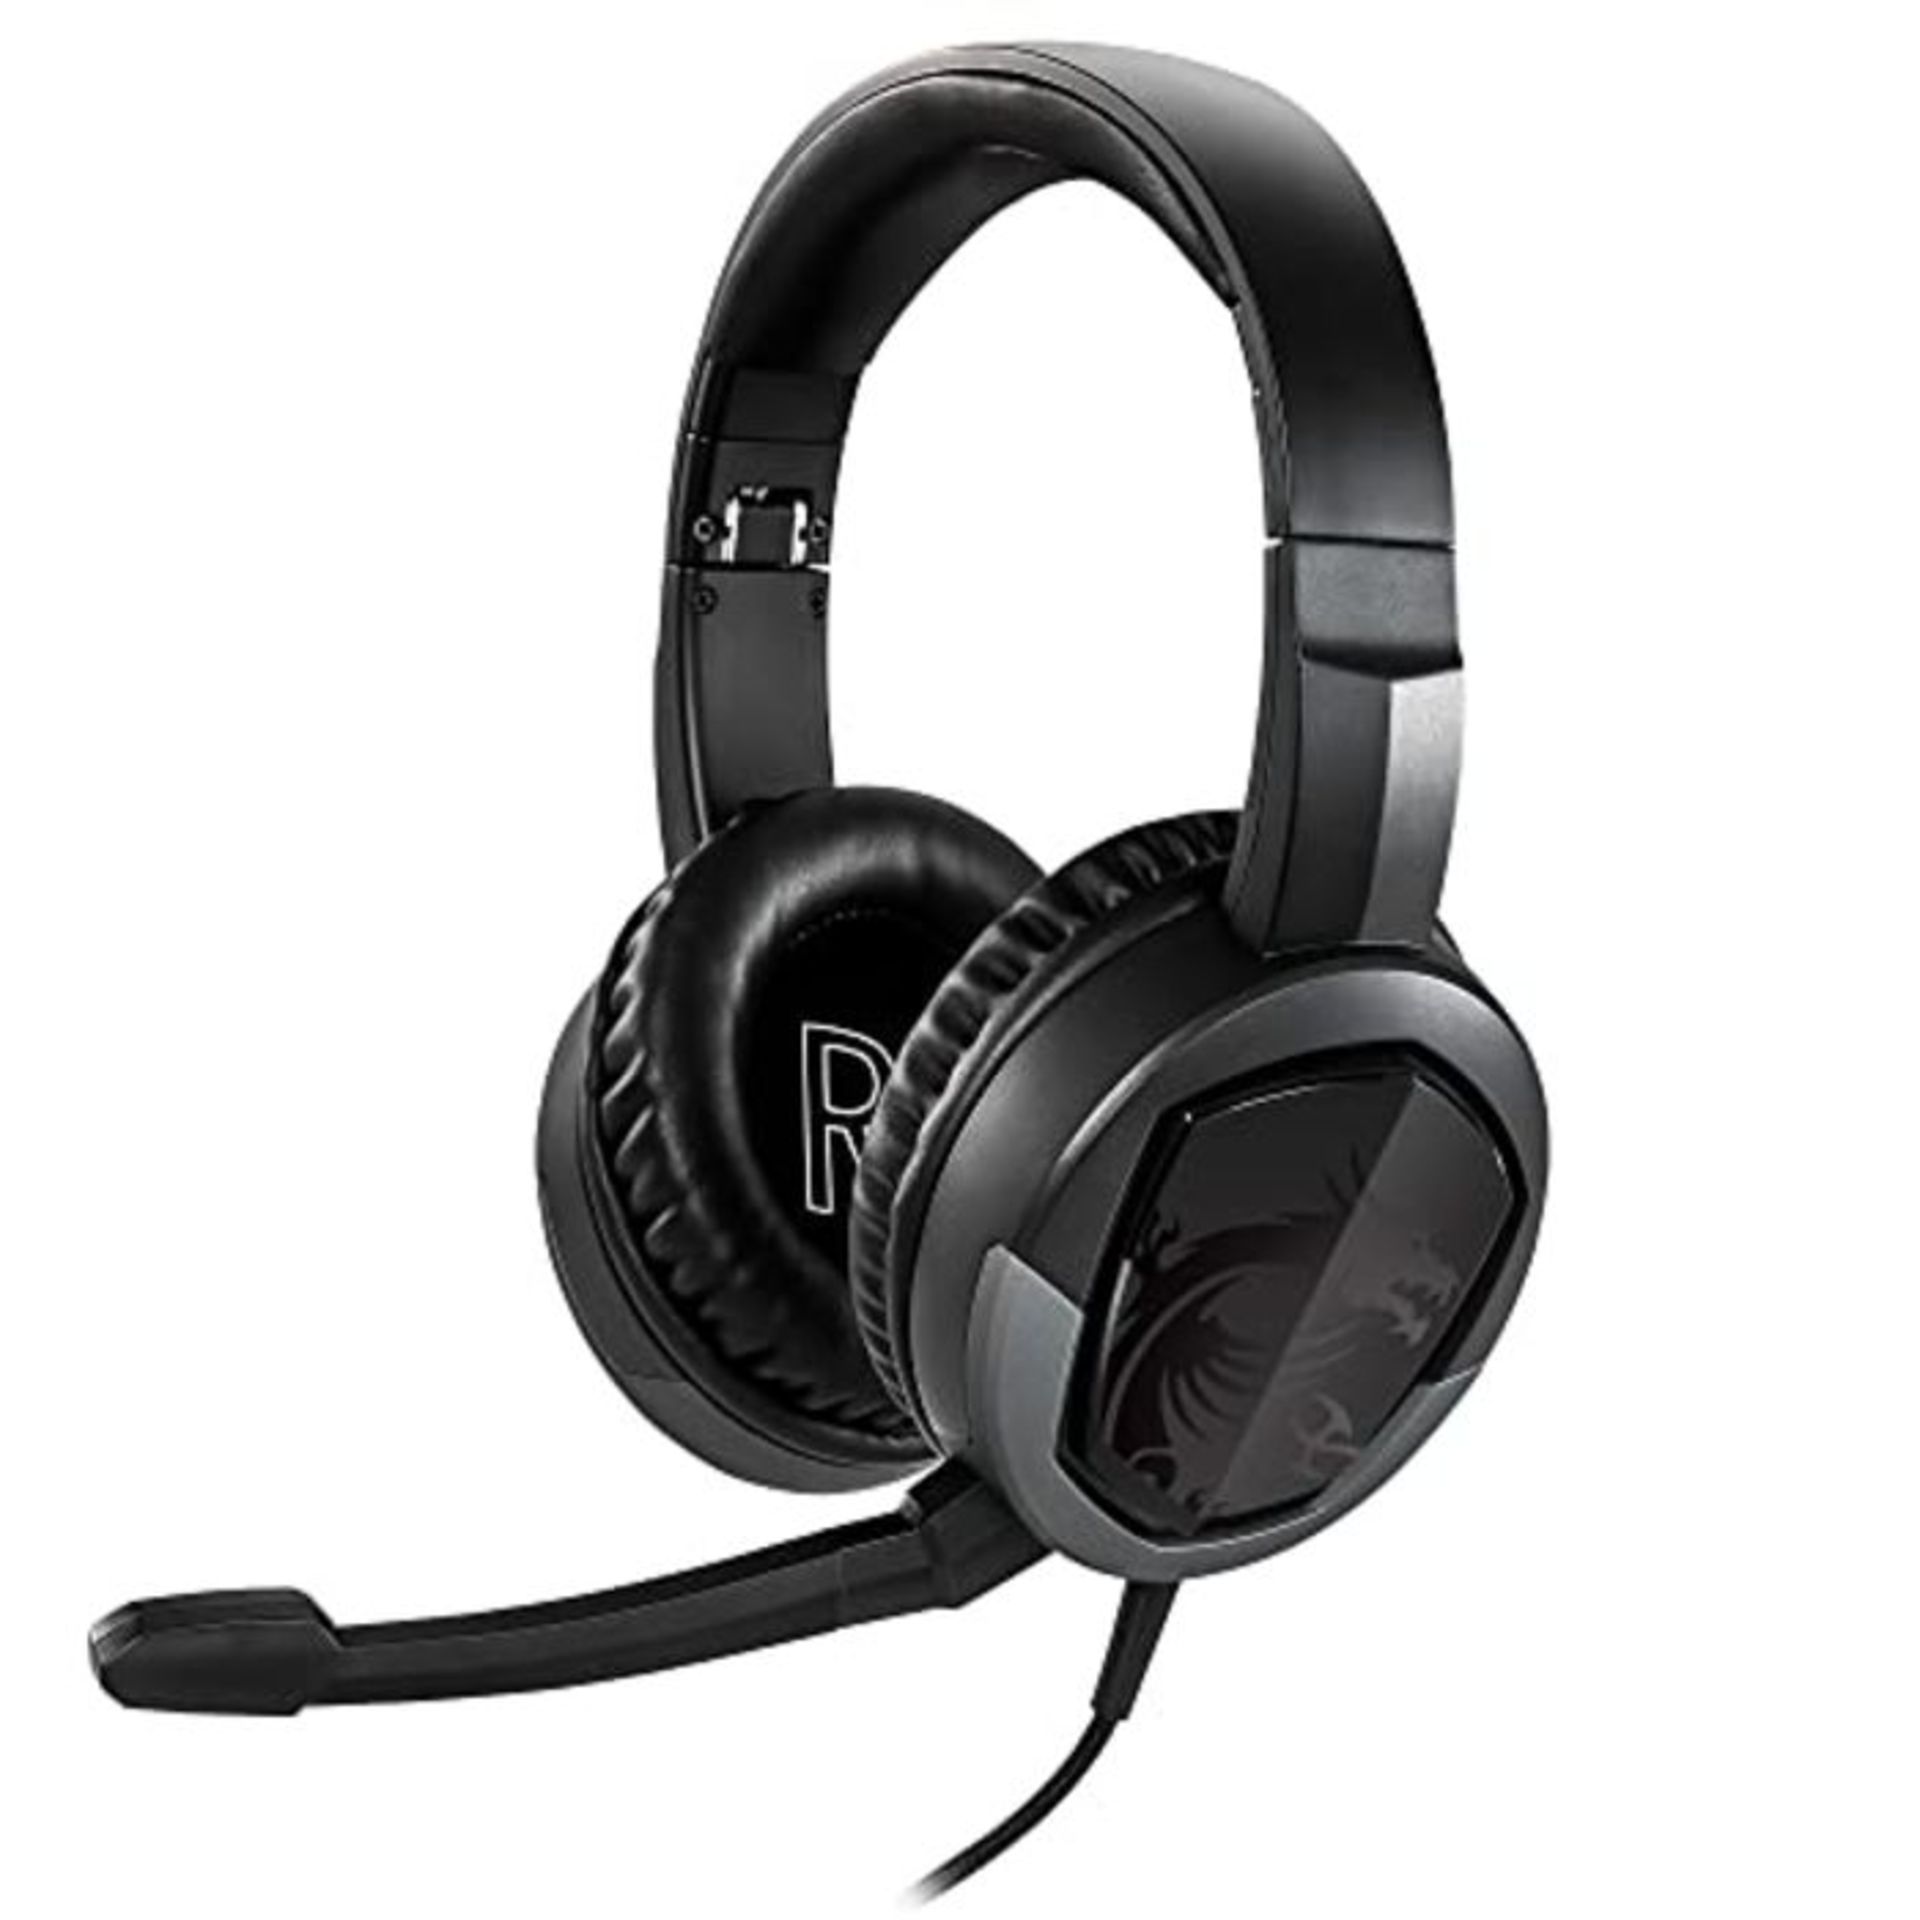 MSI IMMERSE GH30 V2 GAMING HEADSET - Stereo Headphones, Lightweight & Foldable Design,